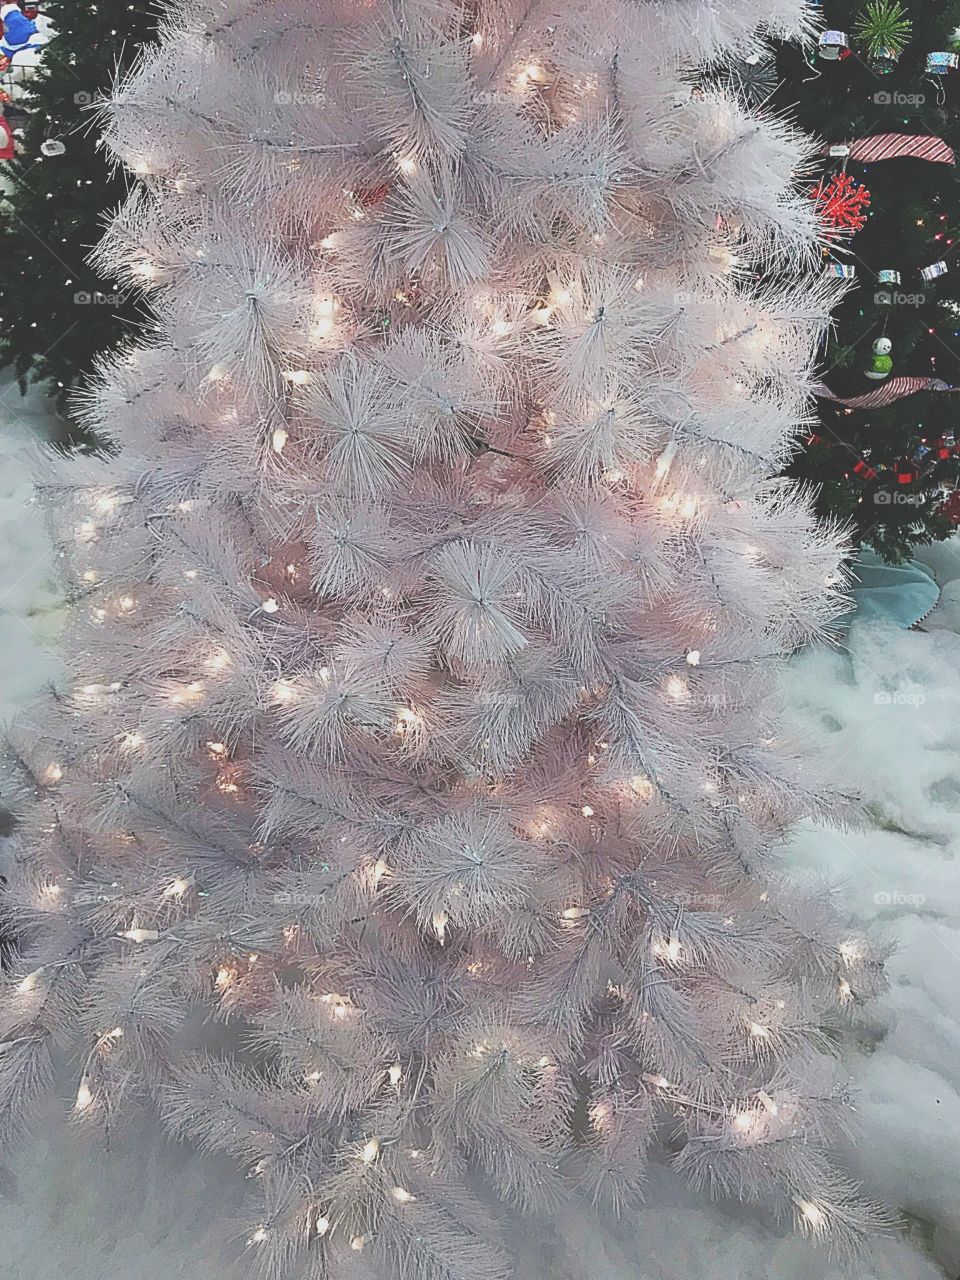 White Christmas tree.
